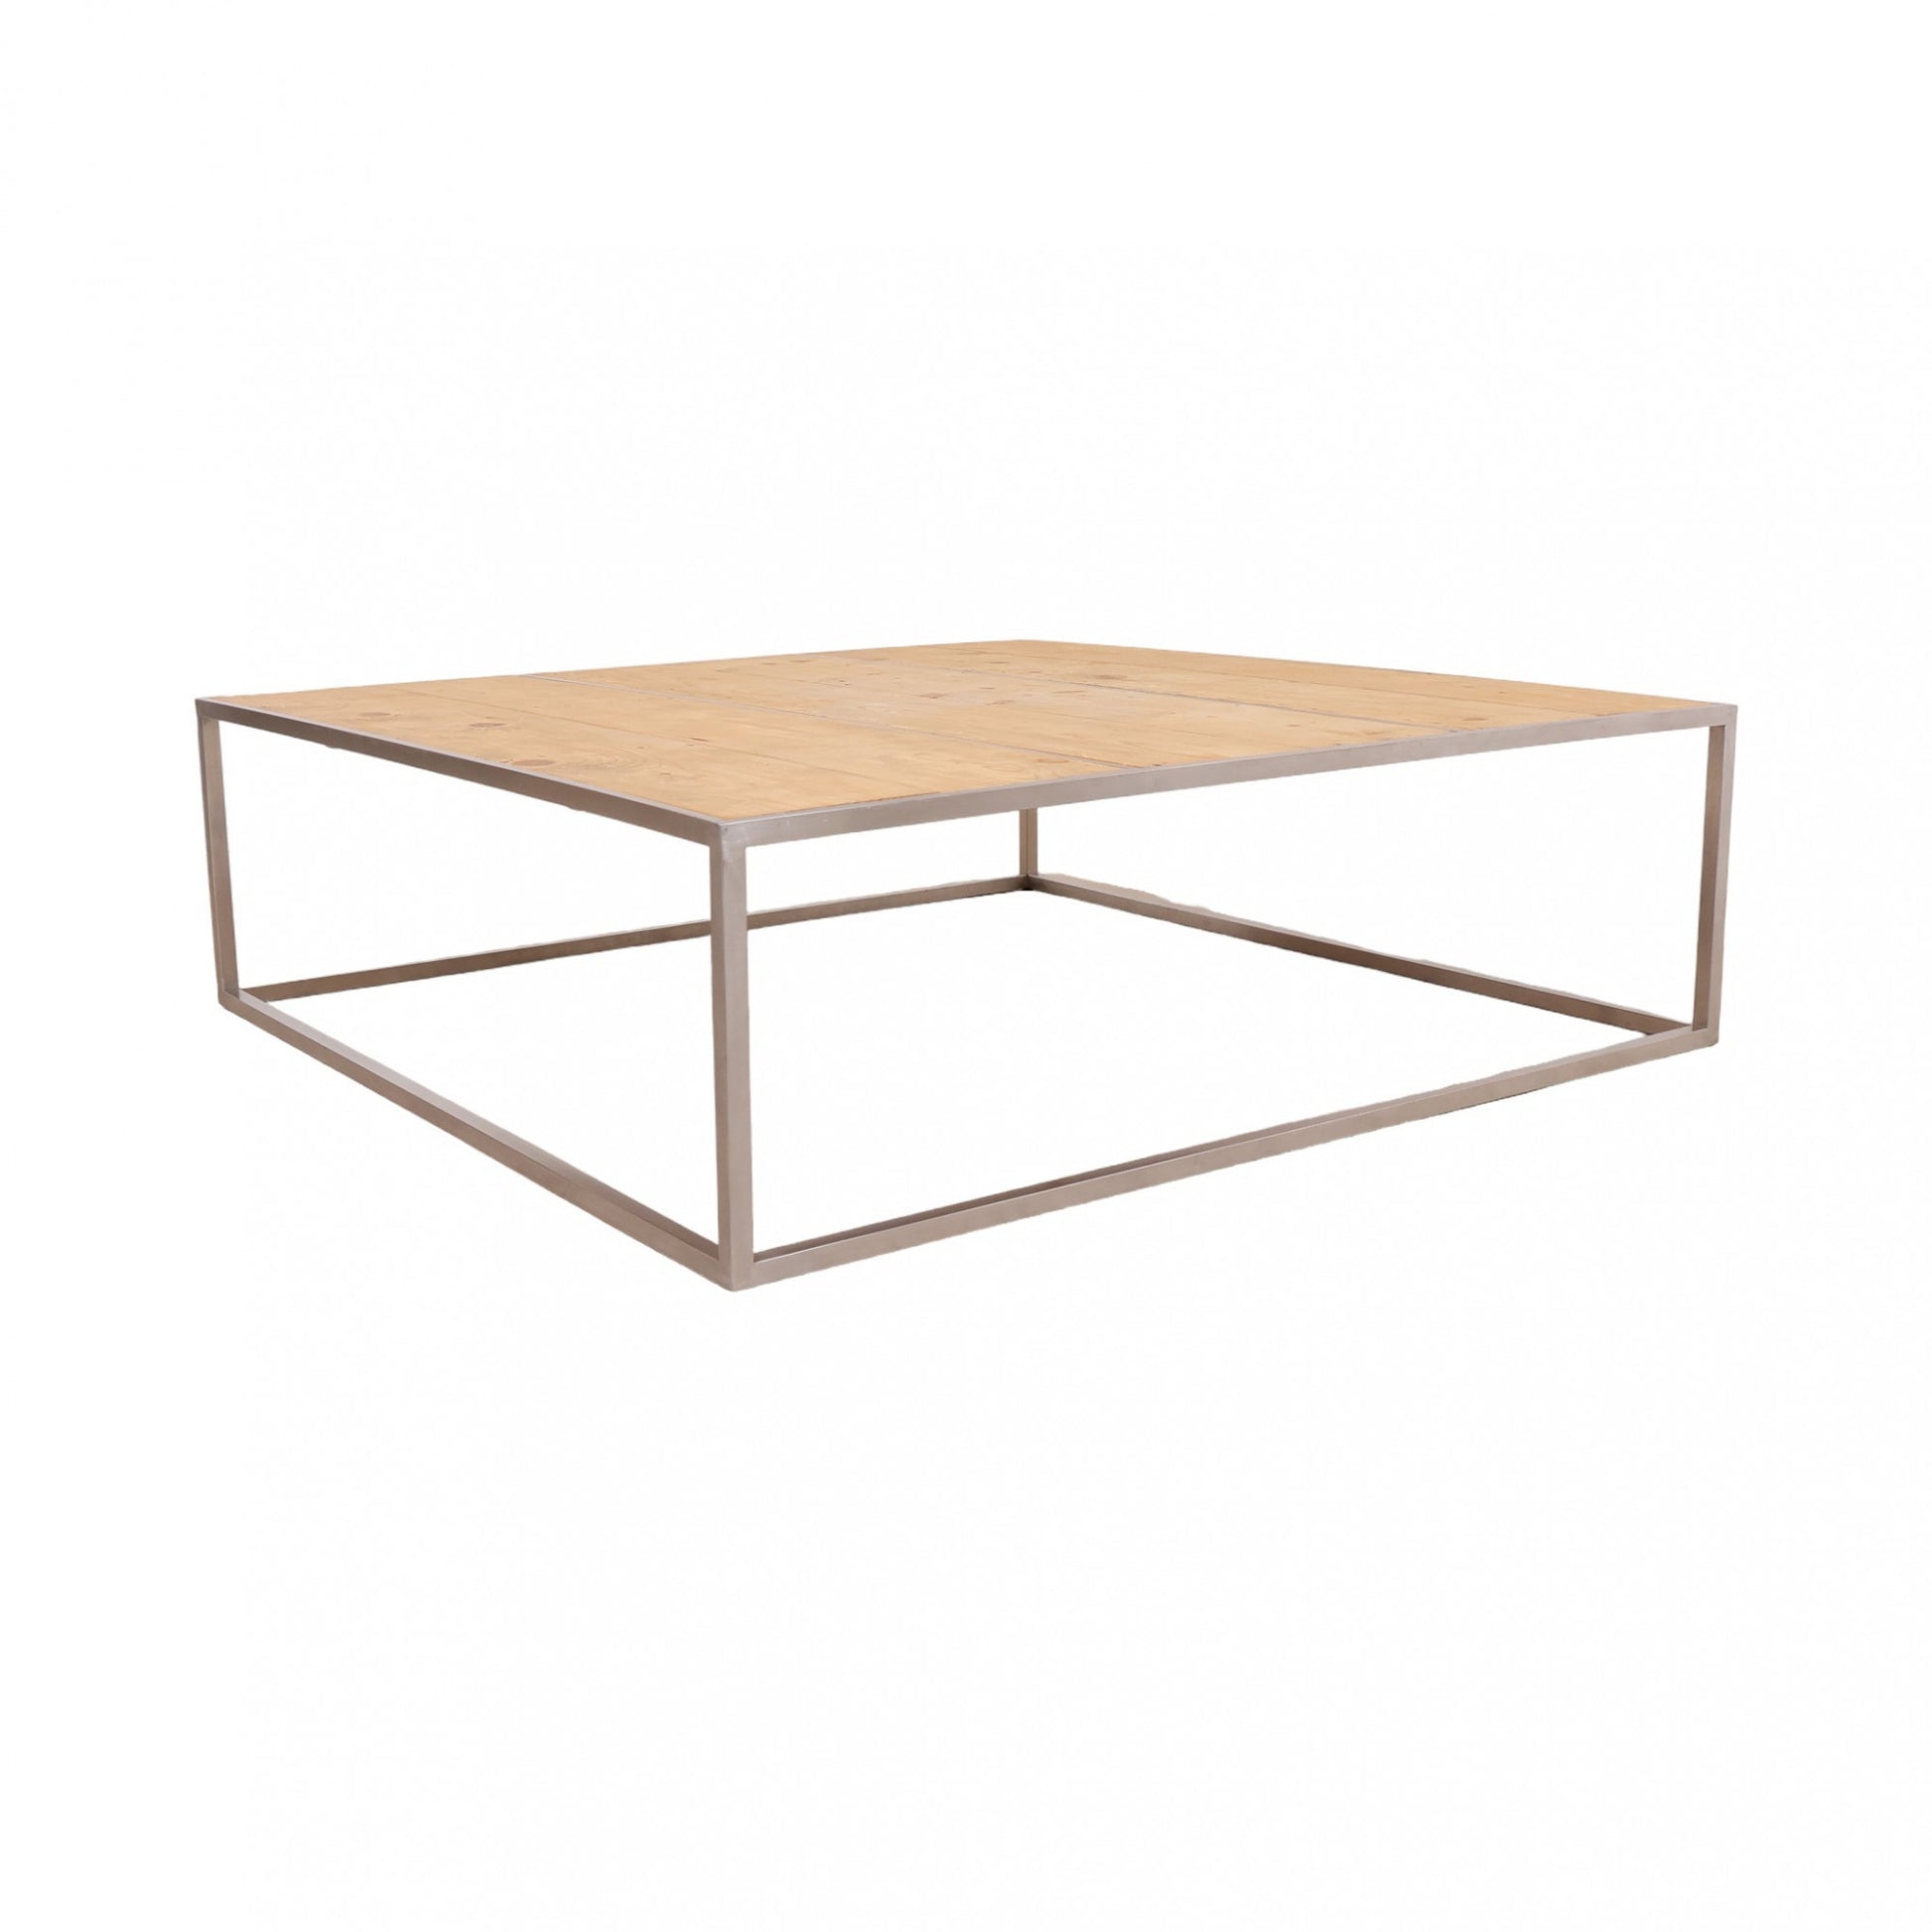 Artsome salongbord/stuebord med bordplate av tre i kvadratisk form